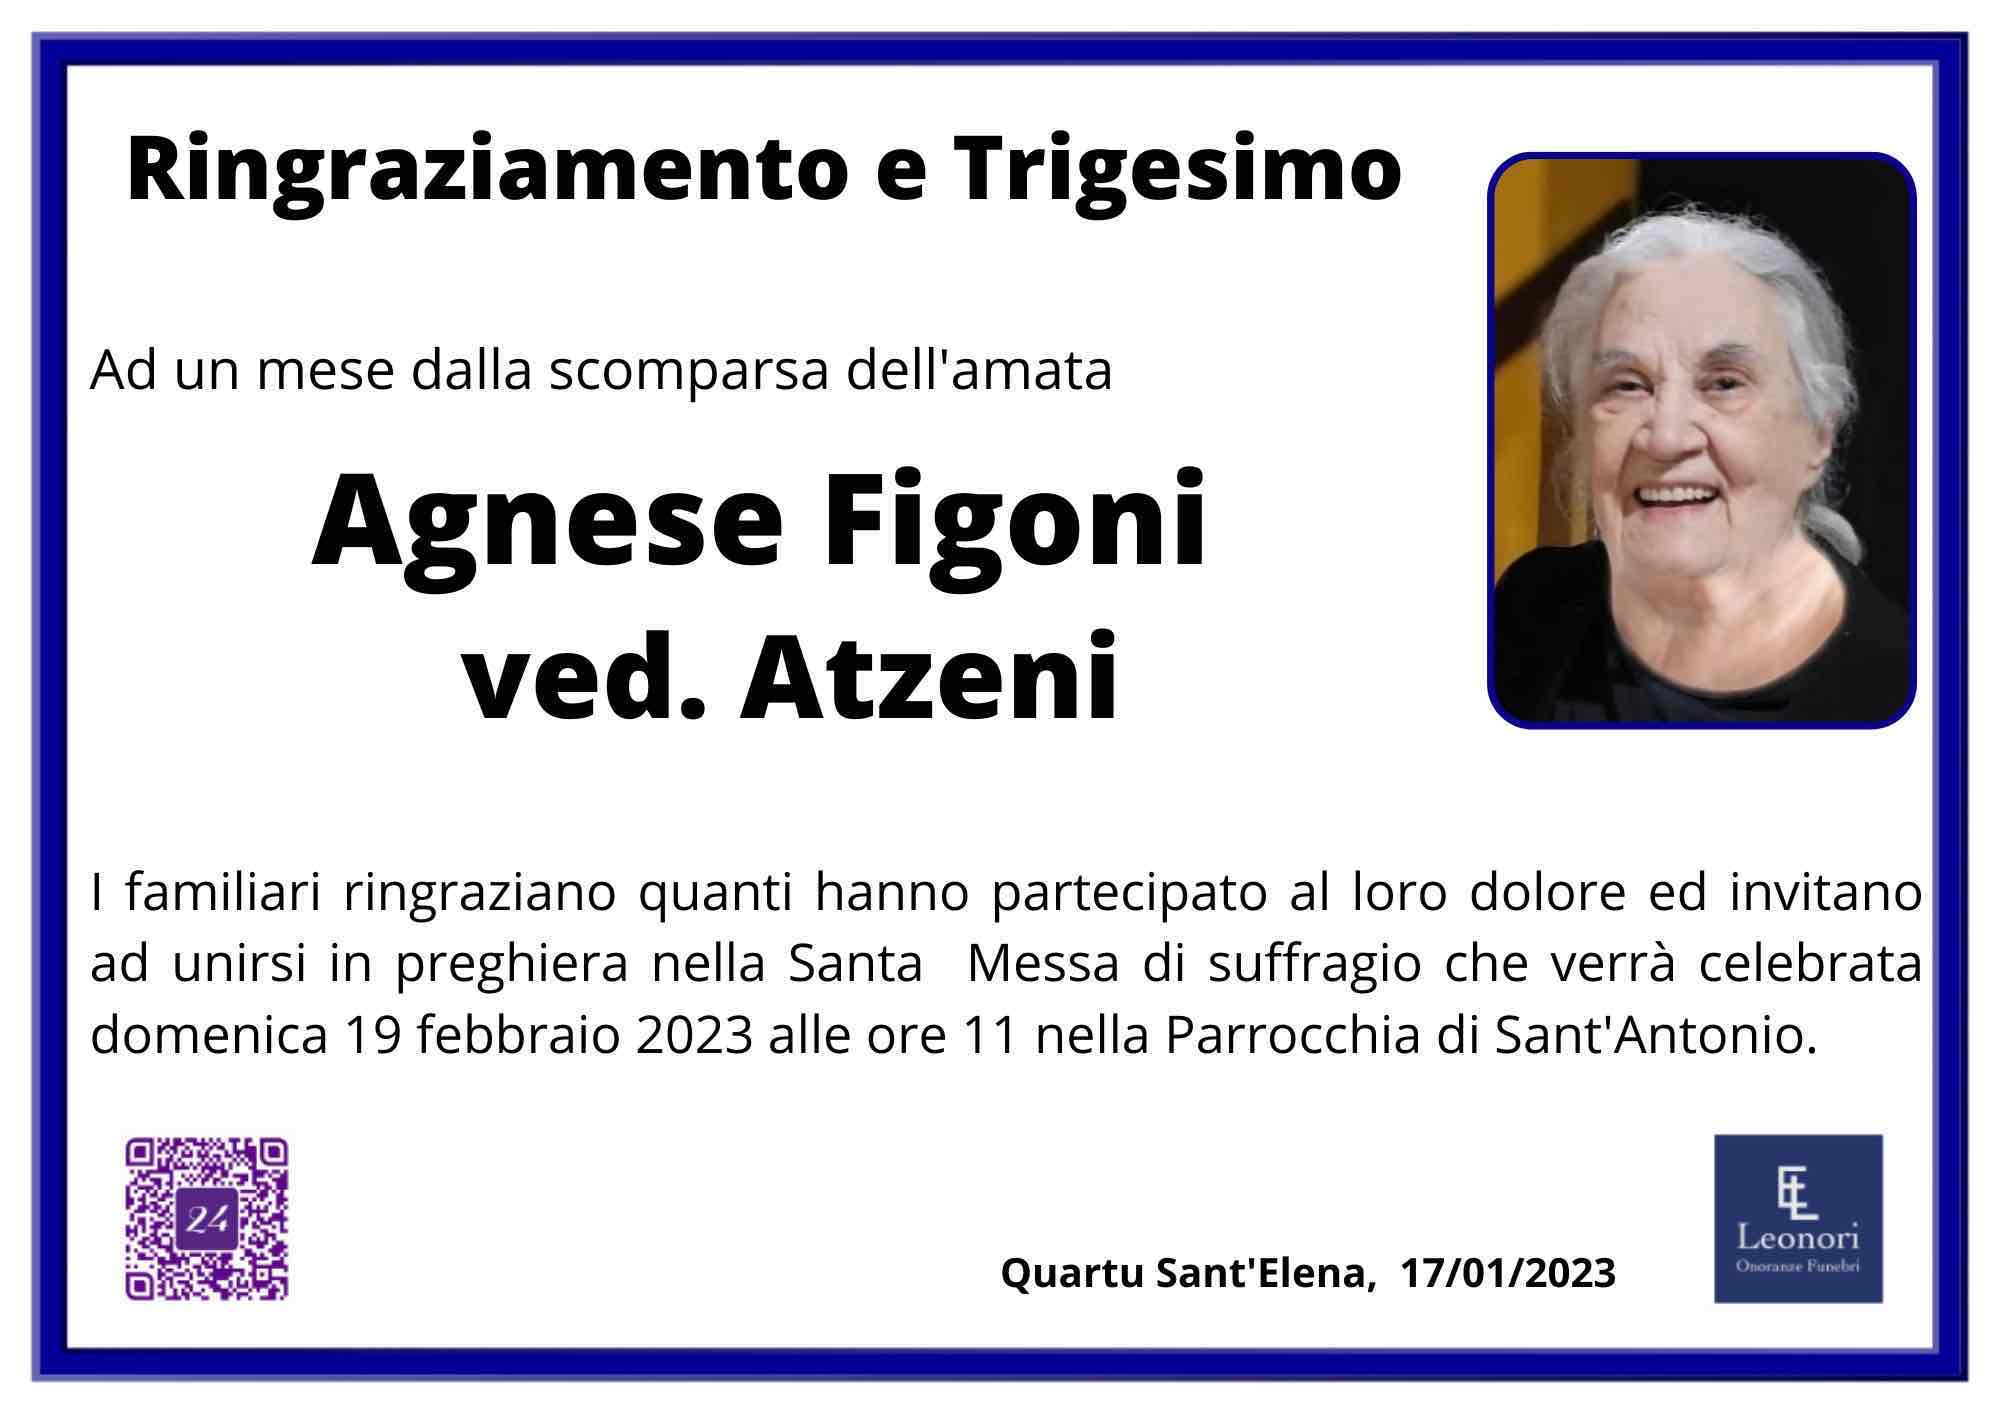 Agnese Figoni